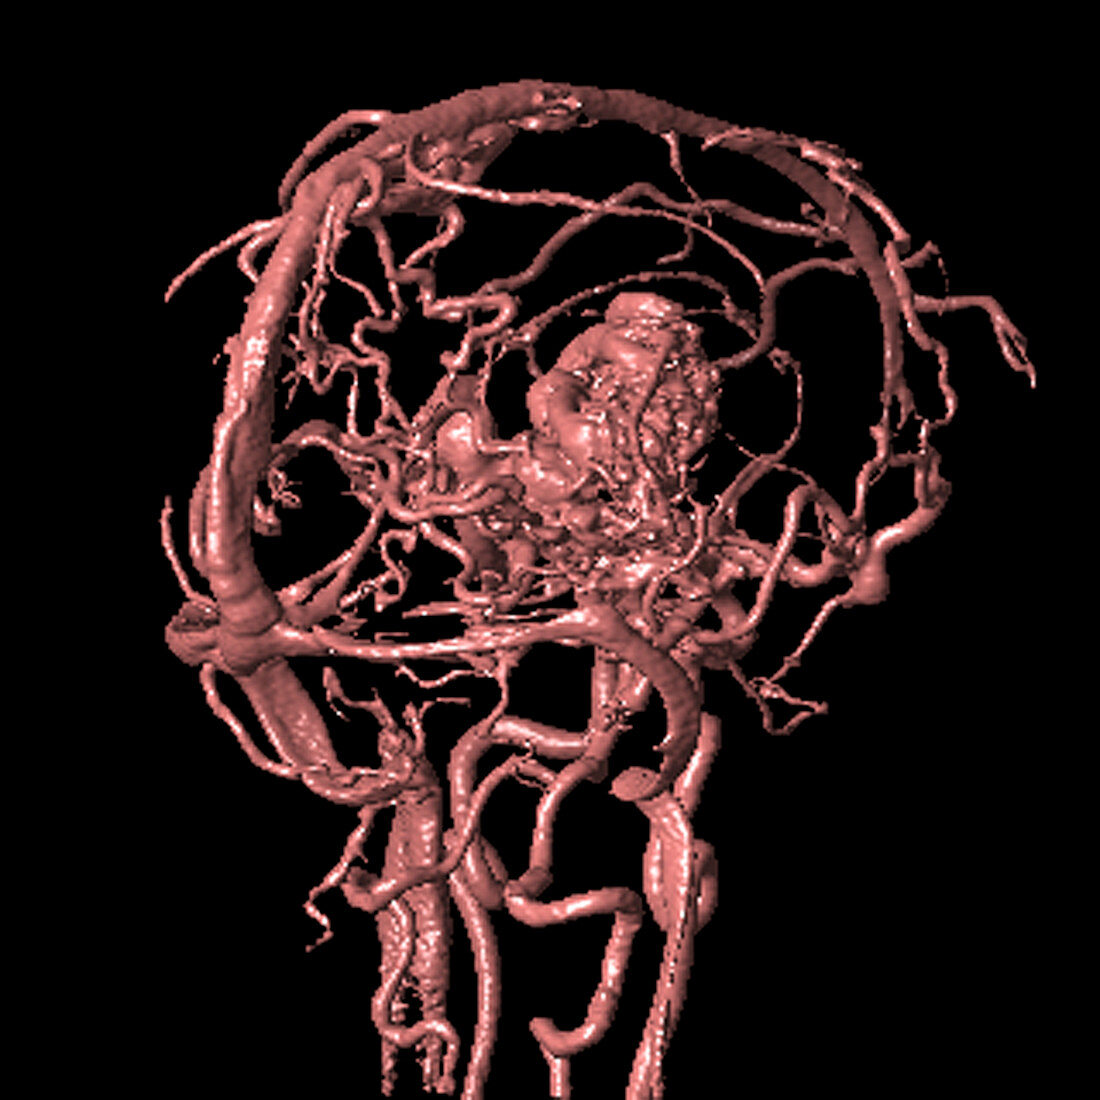 Brain arteriovenous malformation,MRA